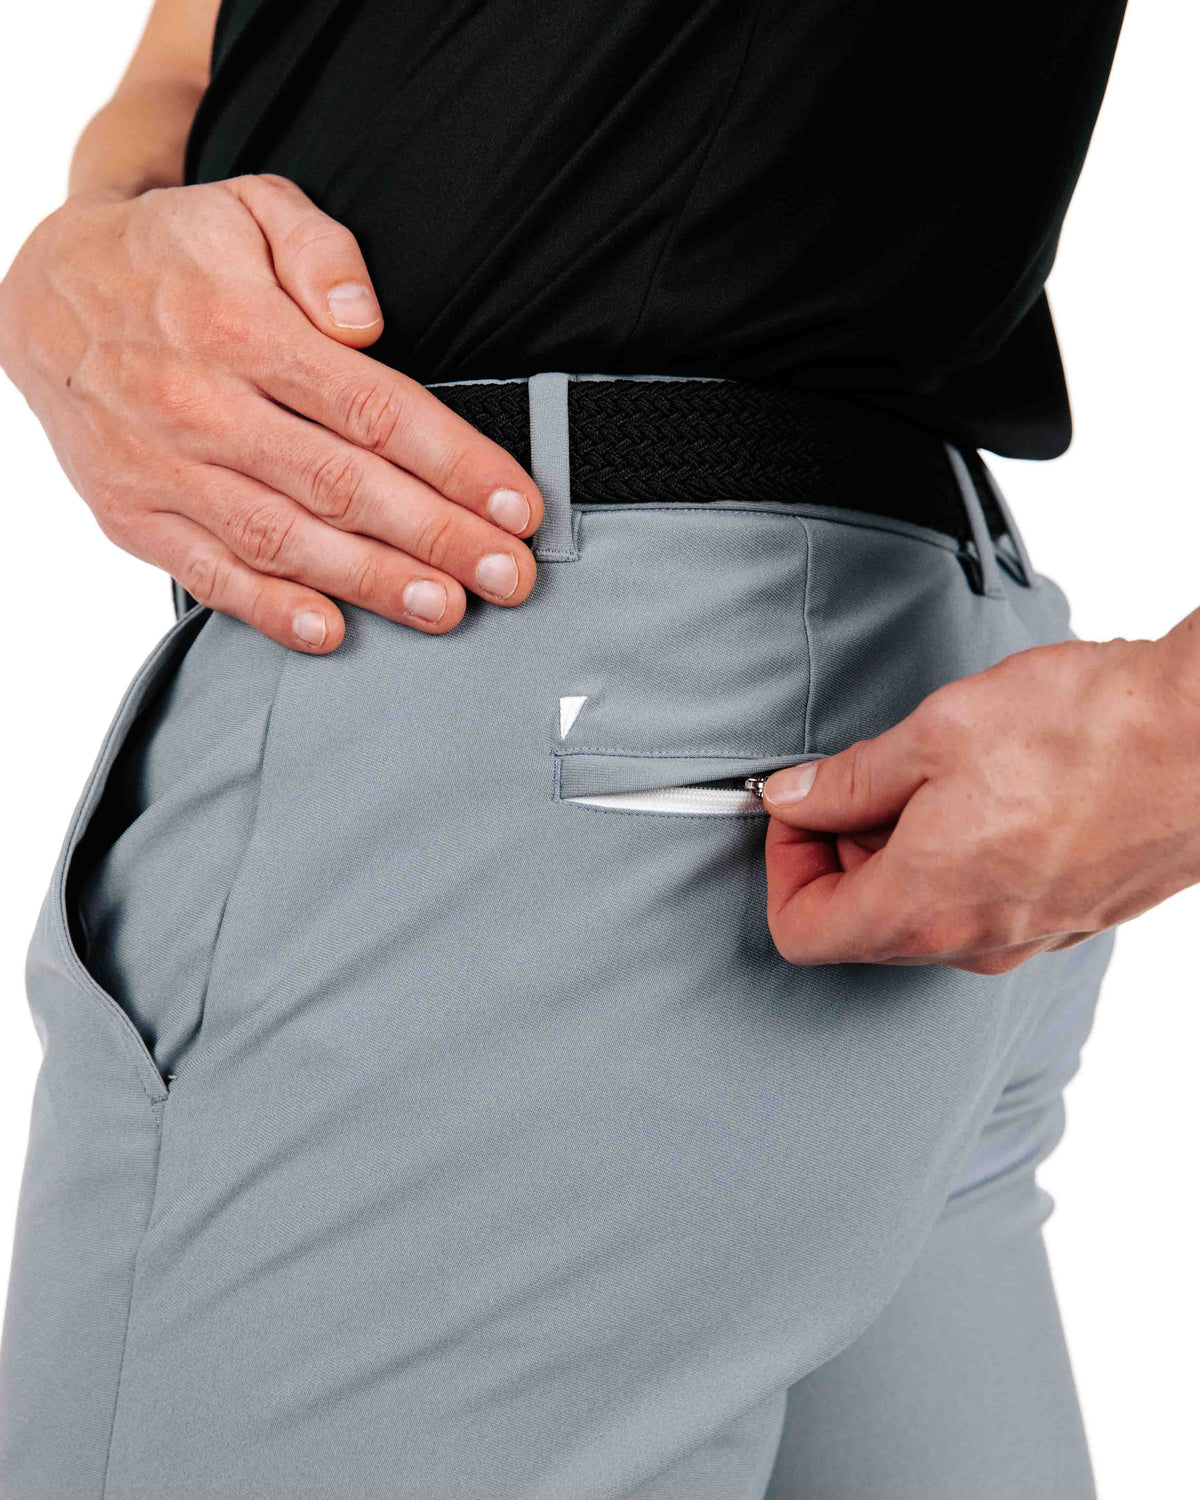 Primo Golf Traditional Pant - Light Gray back pocket Zipper